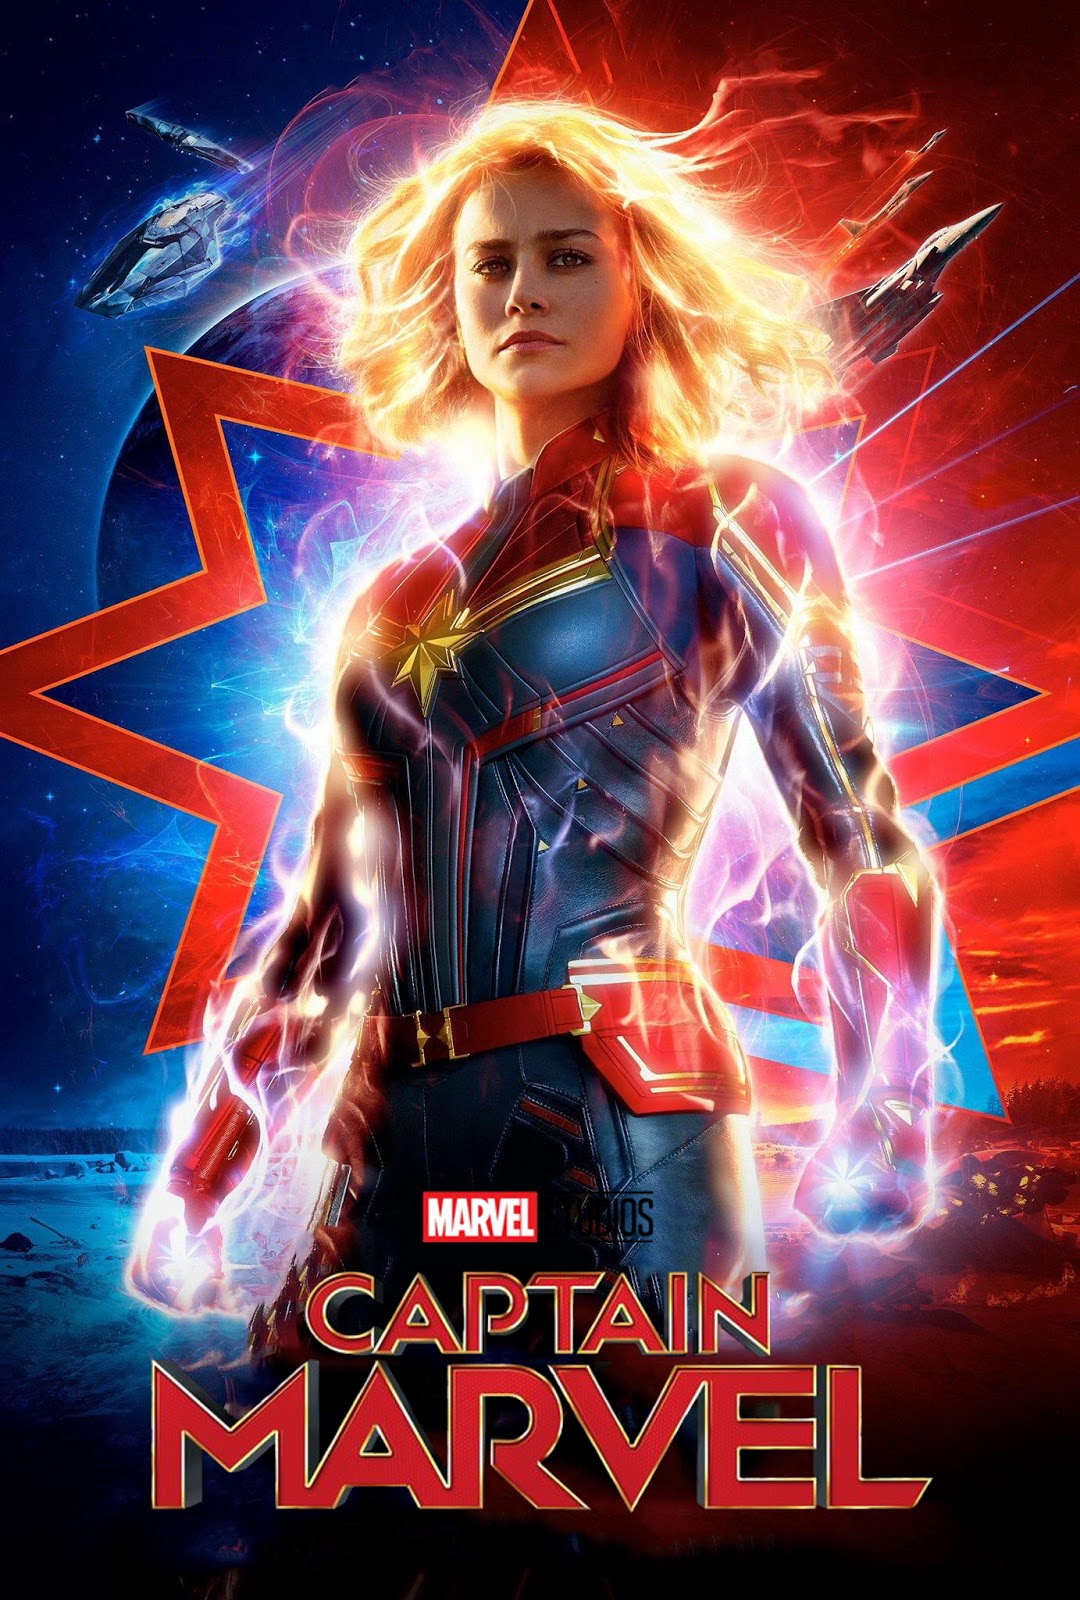 Captain Marvel Film Review